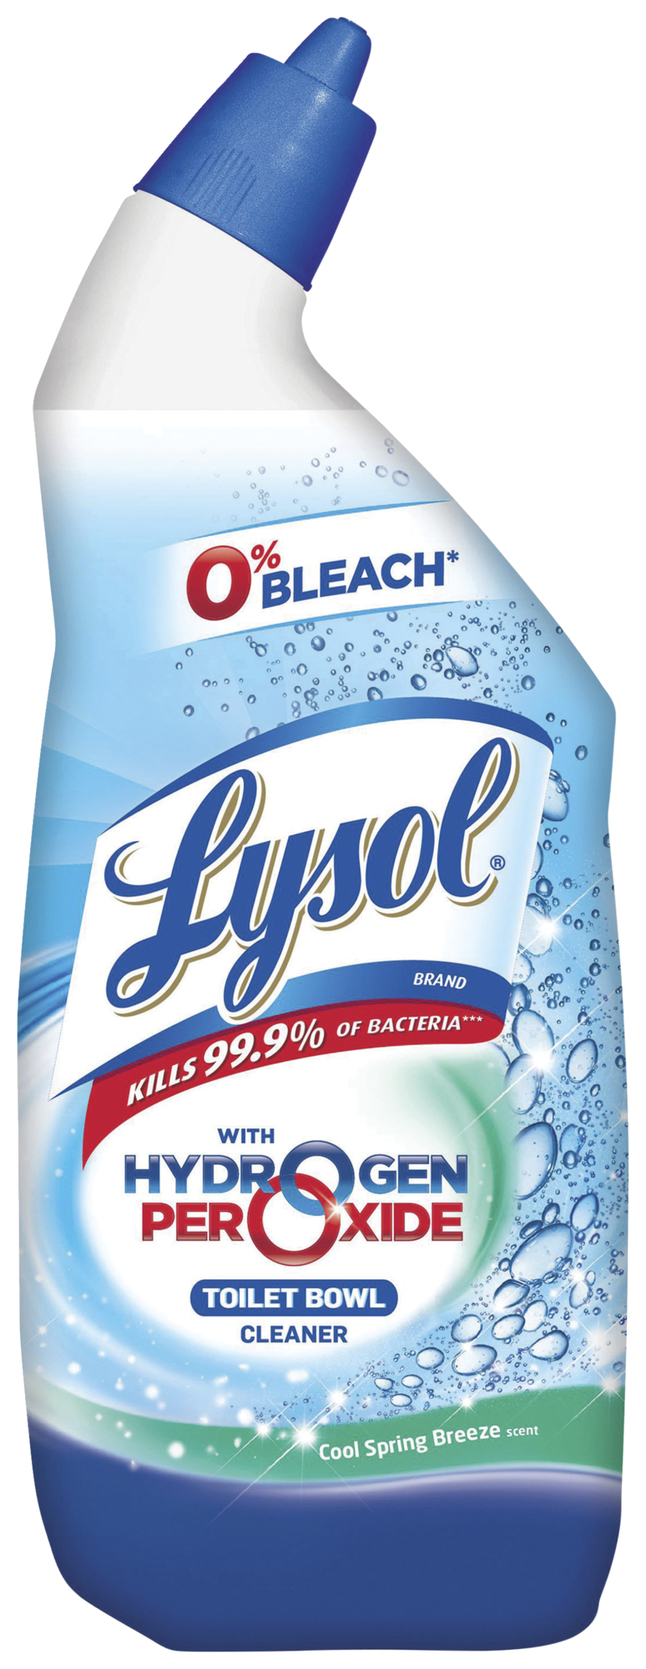 Lysol Hydrogen Peroxide Toilet Cleaner, Item Number 2027471